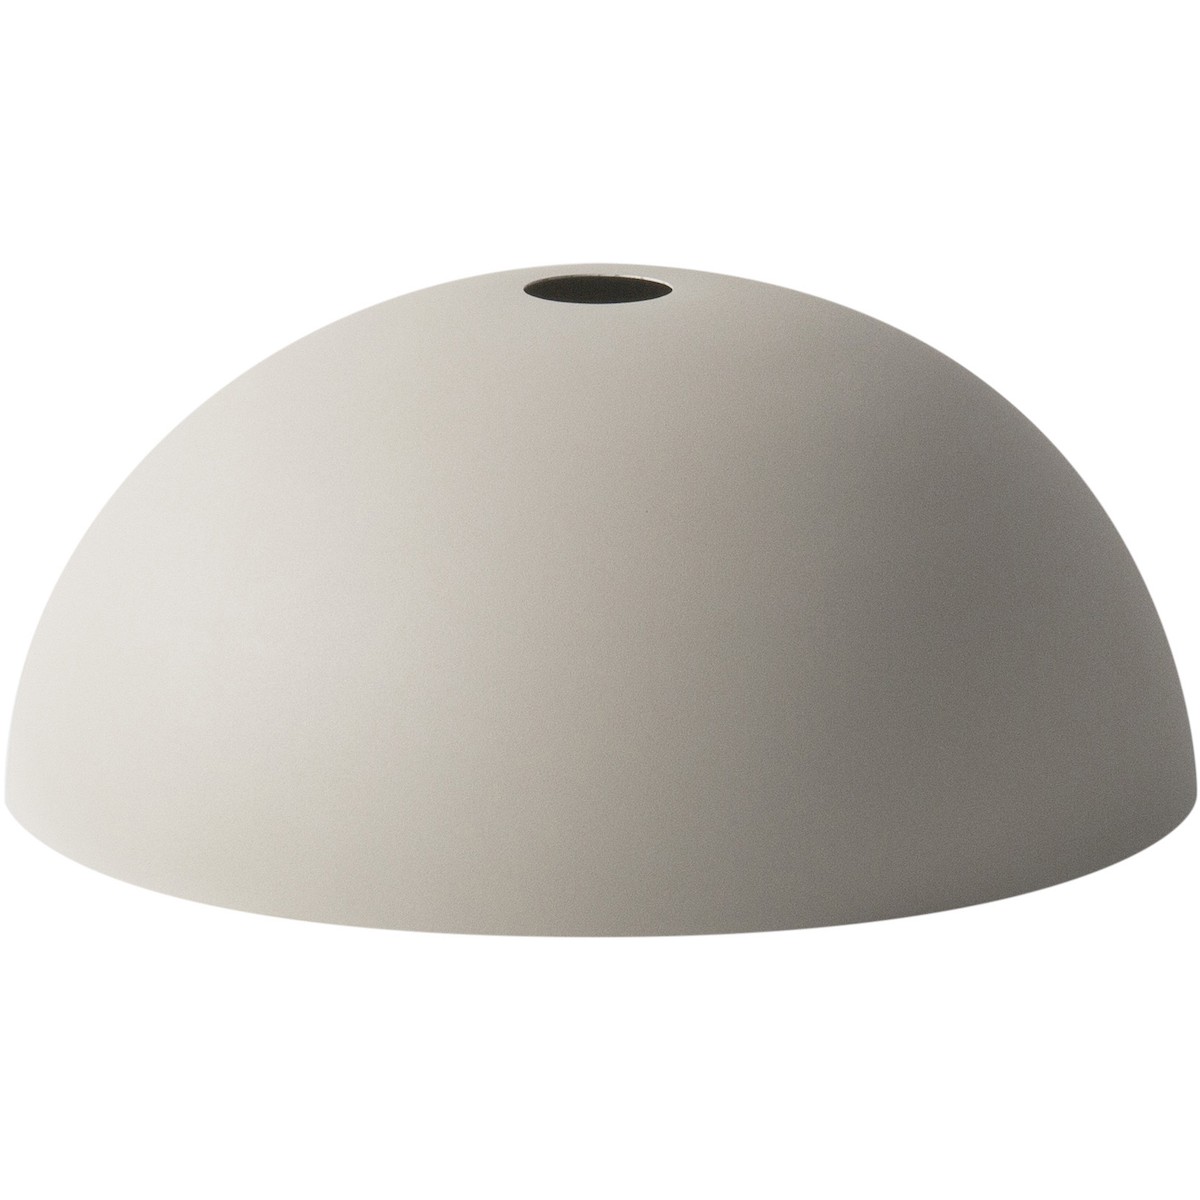 light grey - Dome shade - Collect Lighting